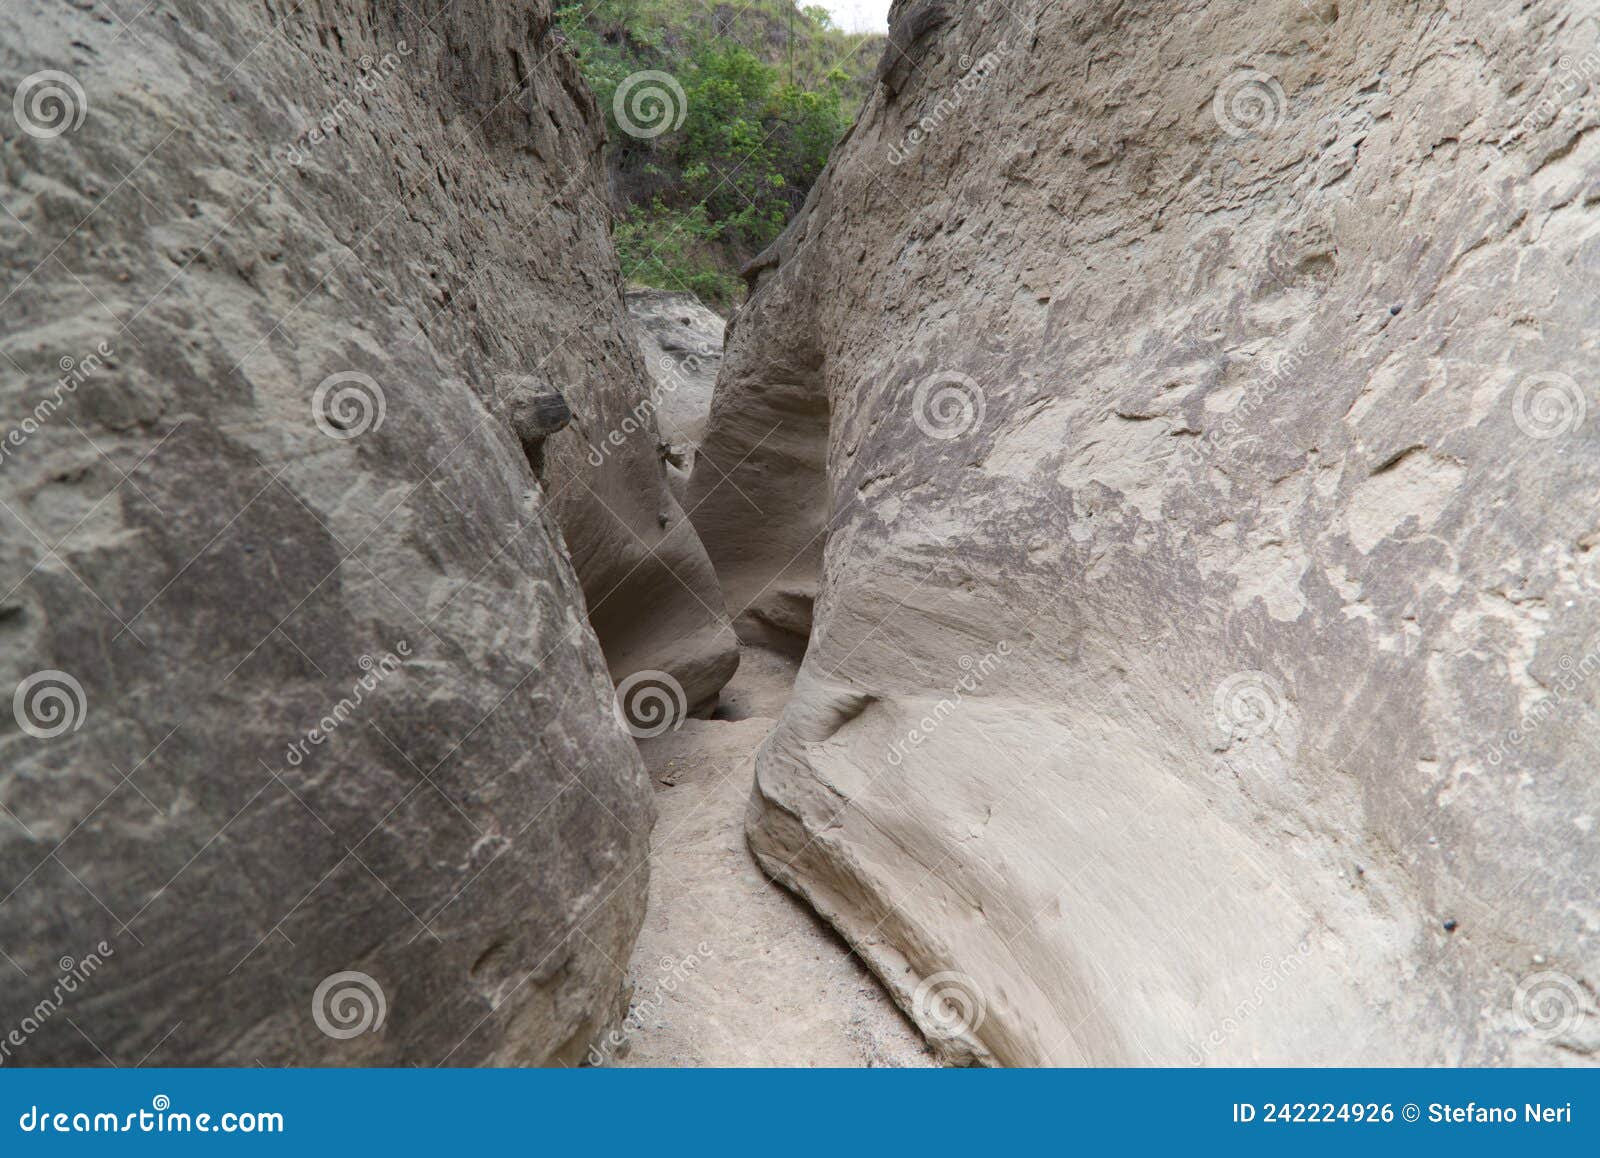 the narrow walls of the los hoyos trail in the gray desert of tatacoa, colombia